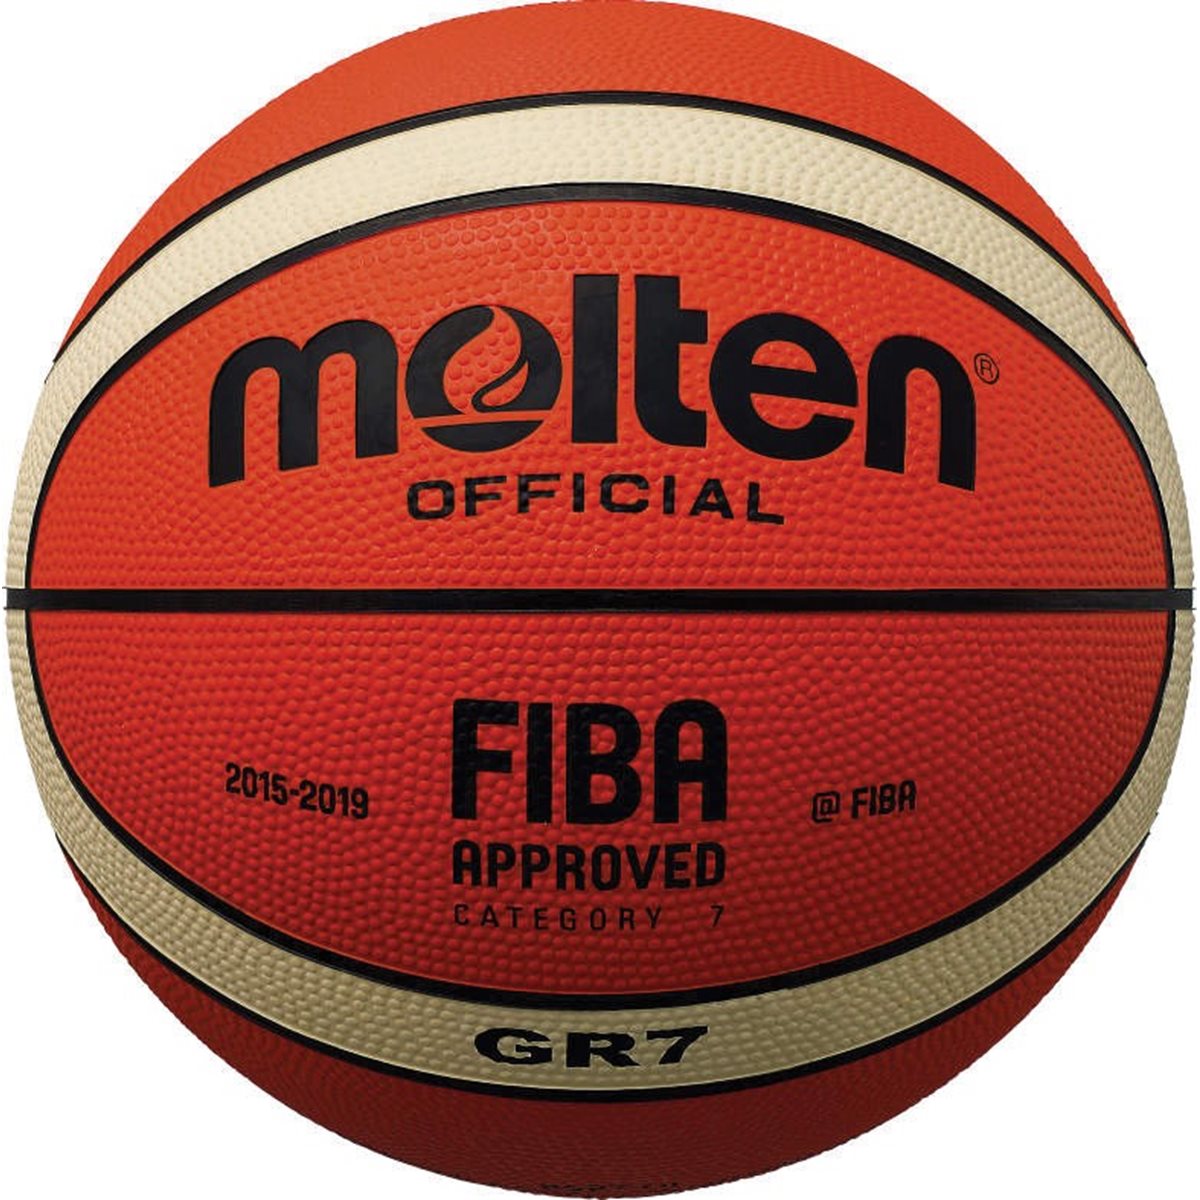 FIBA APPROVED BGR RUBBER BASKETBALL